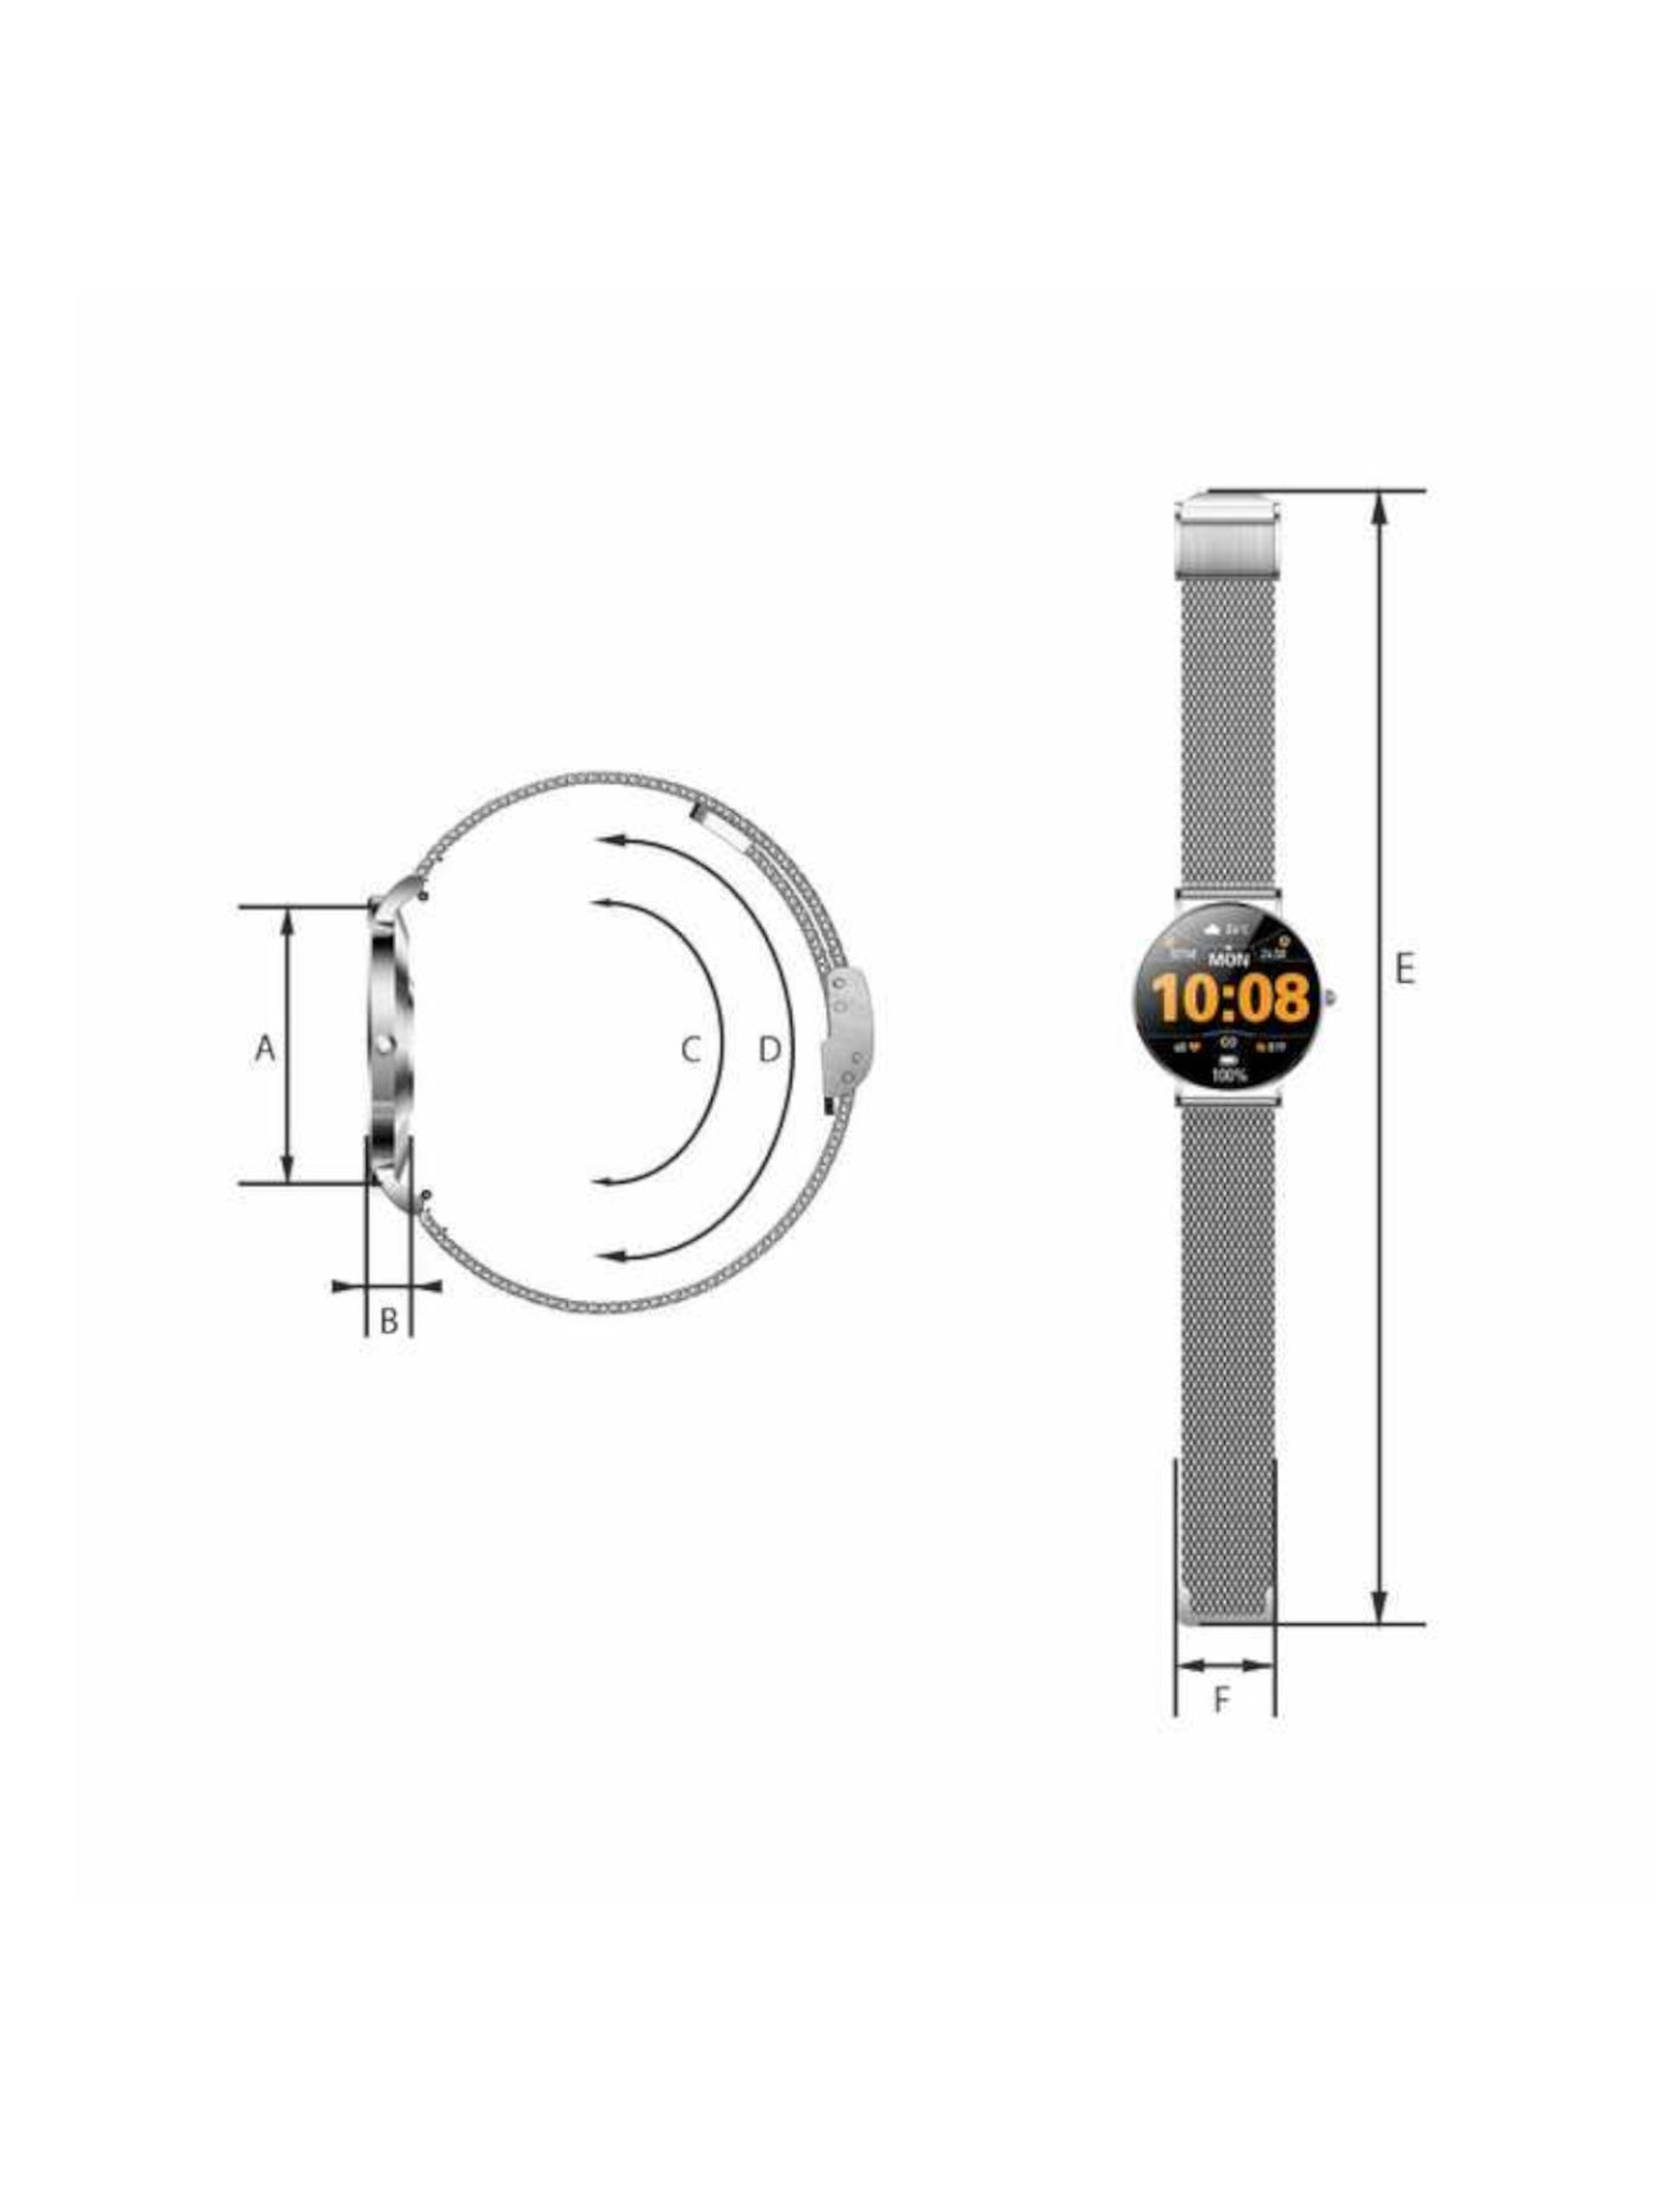 Smartwatch zegarek damski Manta Alexa - srebrny + czarny pasek